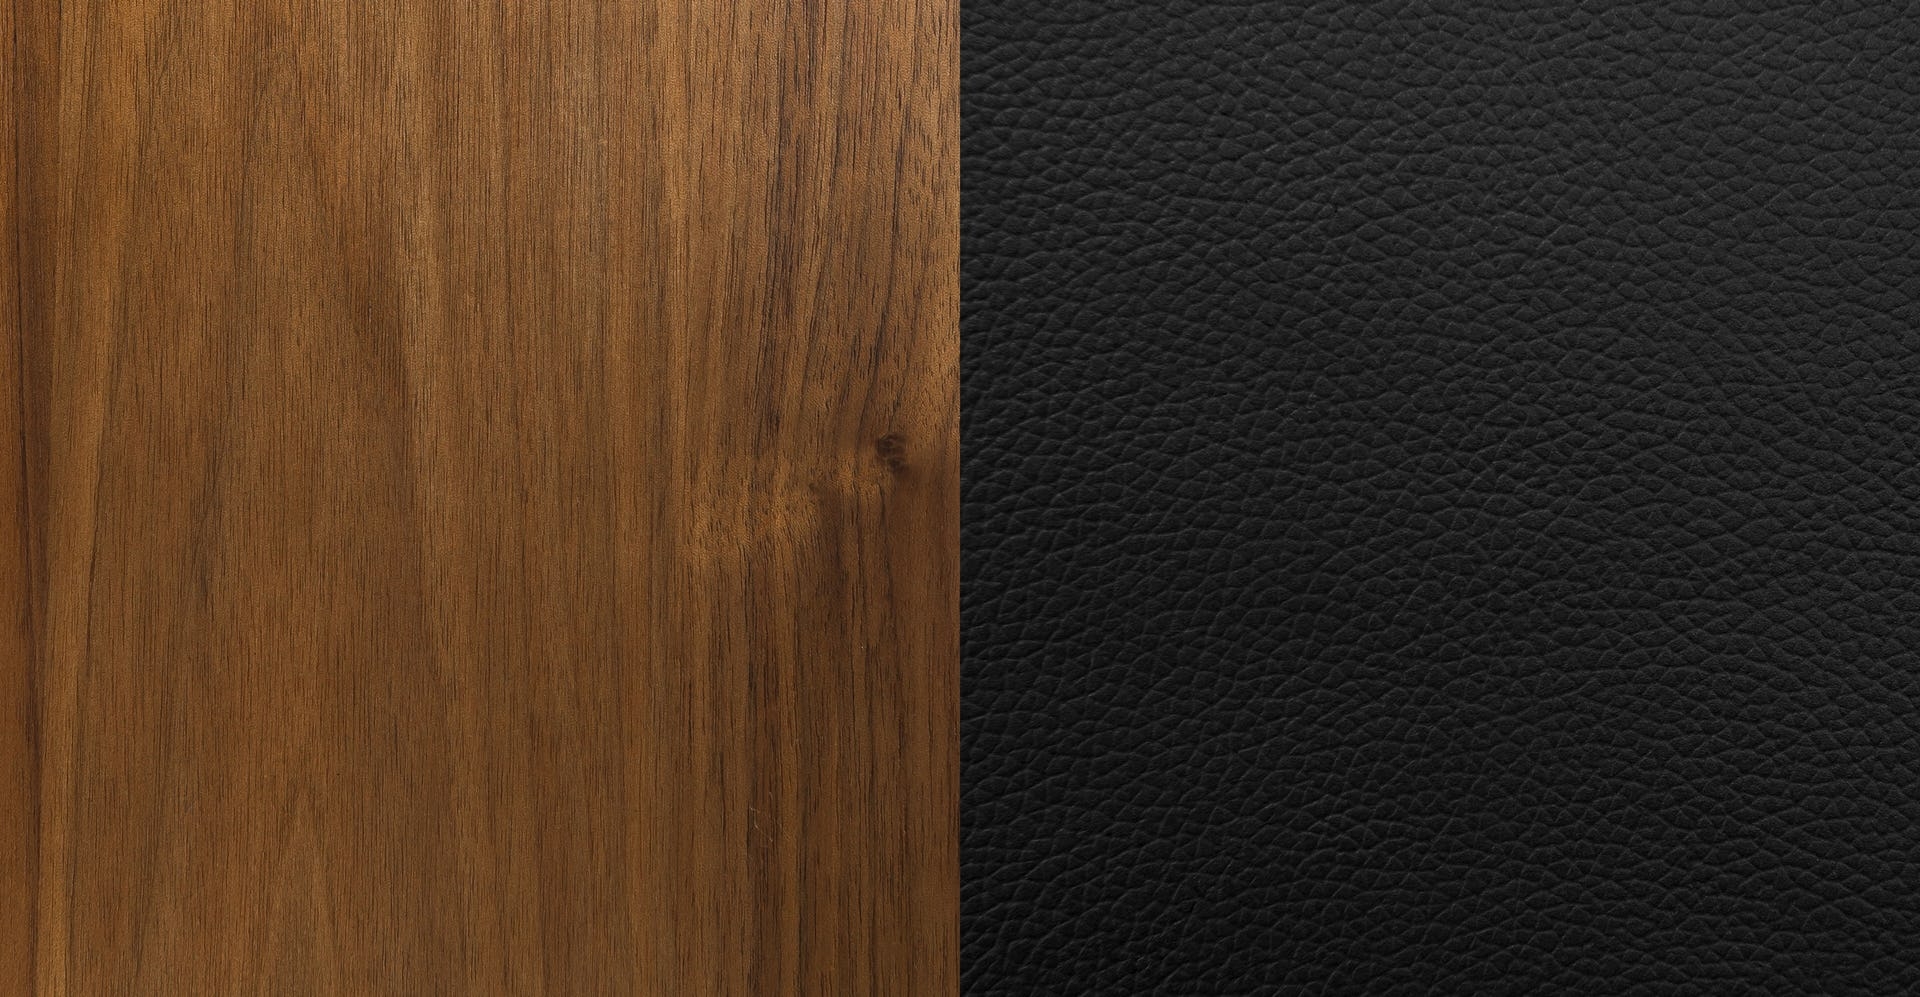 Sede Black Leather Walnut Counter Stool- set of 2 - Image 4